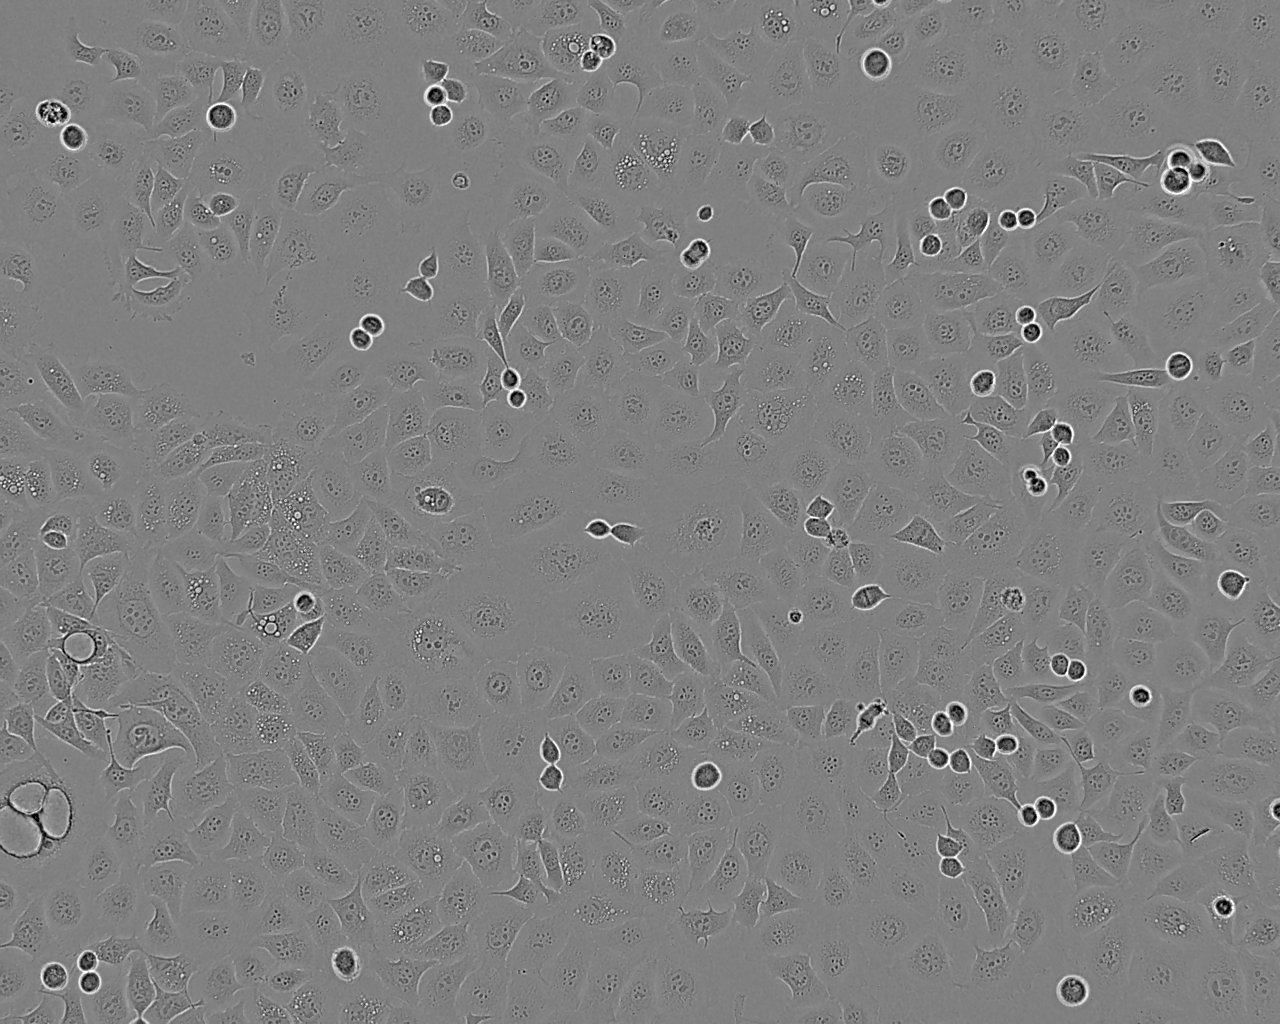 KYSE-70 Cell:人食管癌细胞系